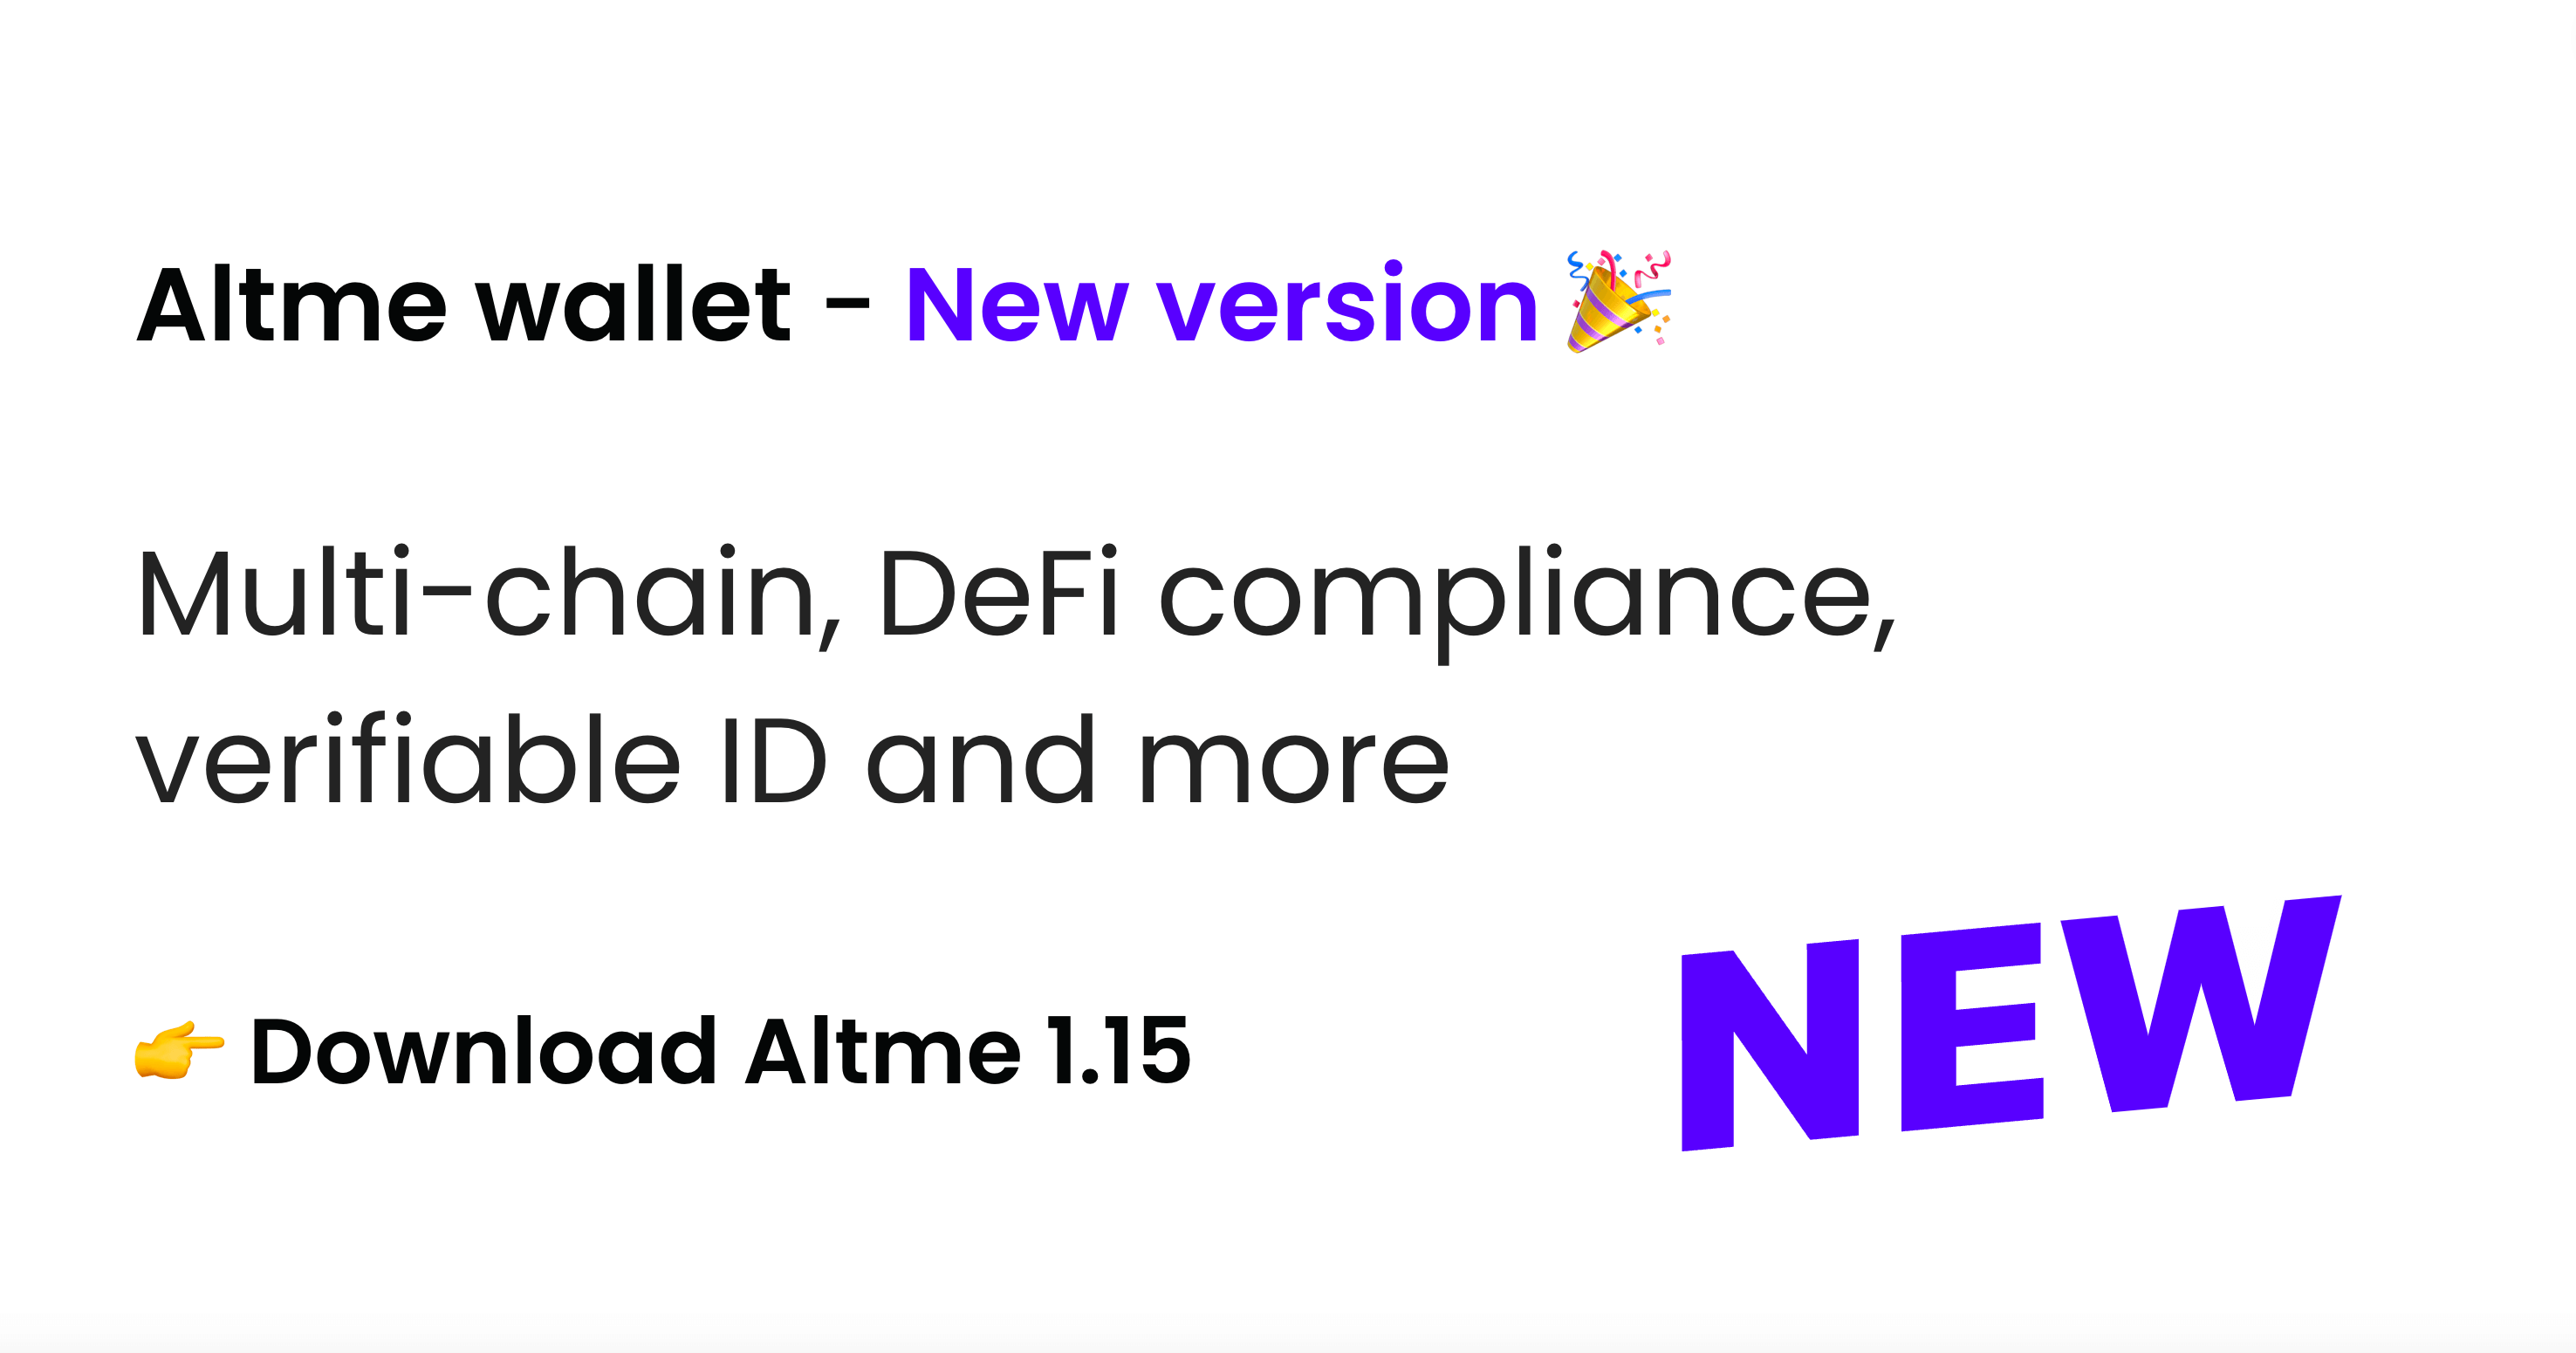 Altme wallet 1.15: Multichain, reliable digital ID, DeFi compliance